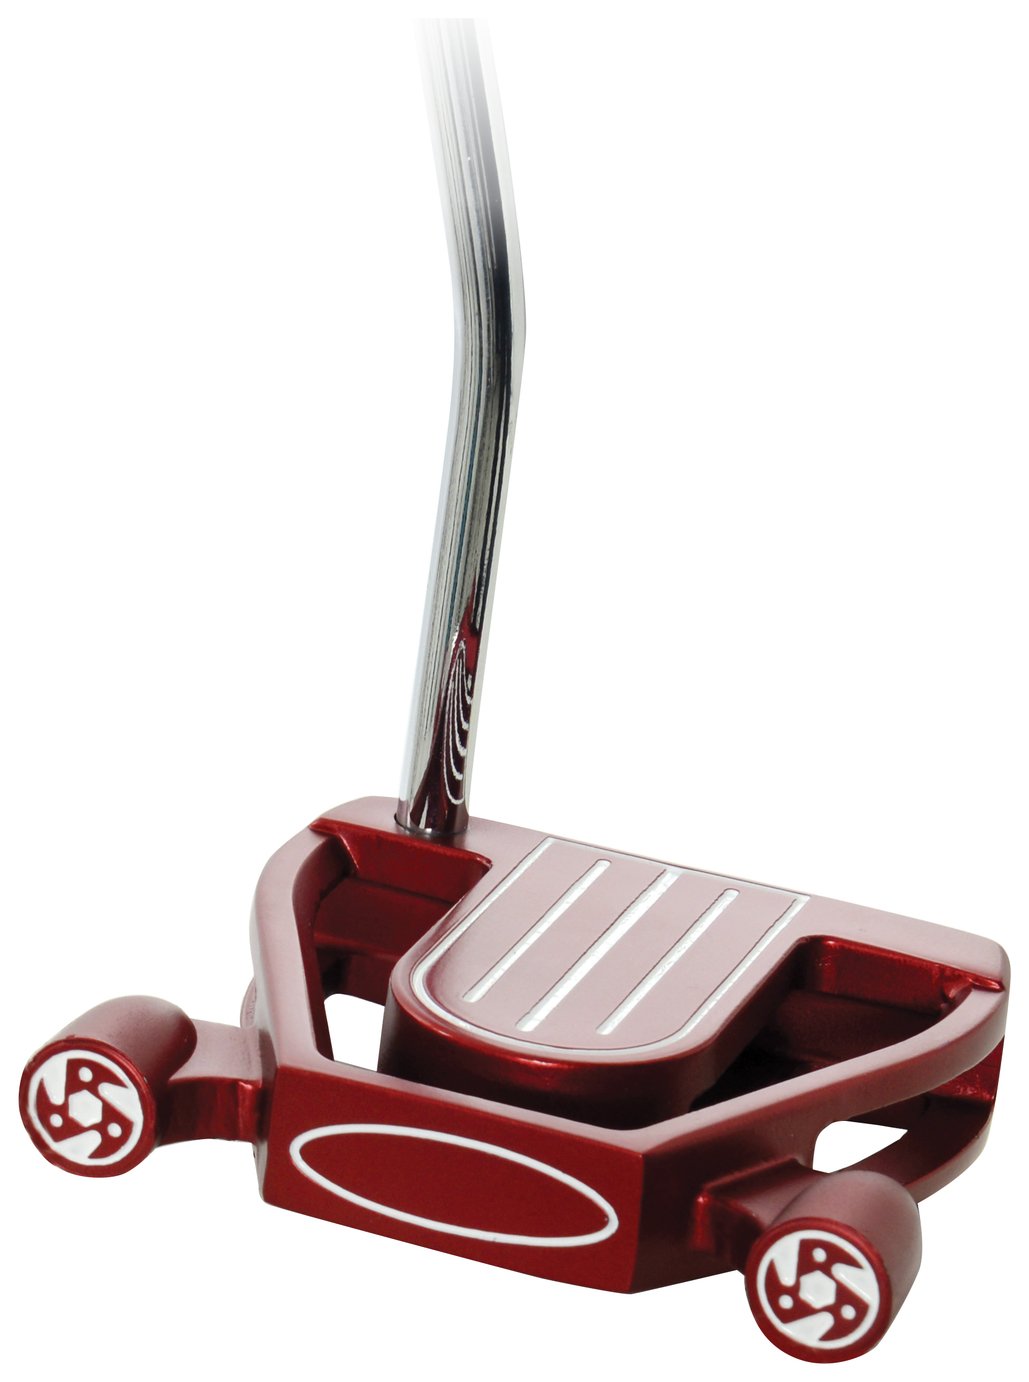 Ben Sayers XF NB2 Putter Golf Club - Red